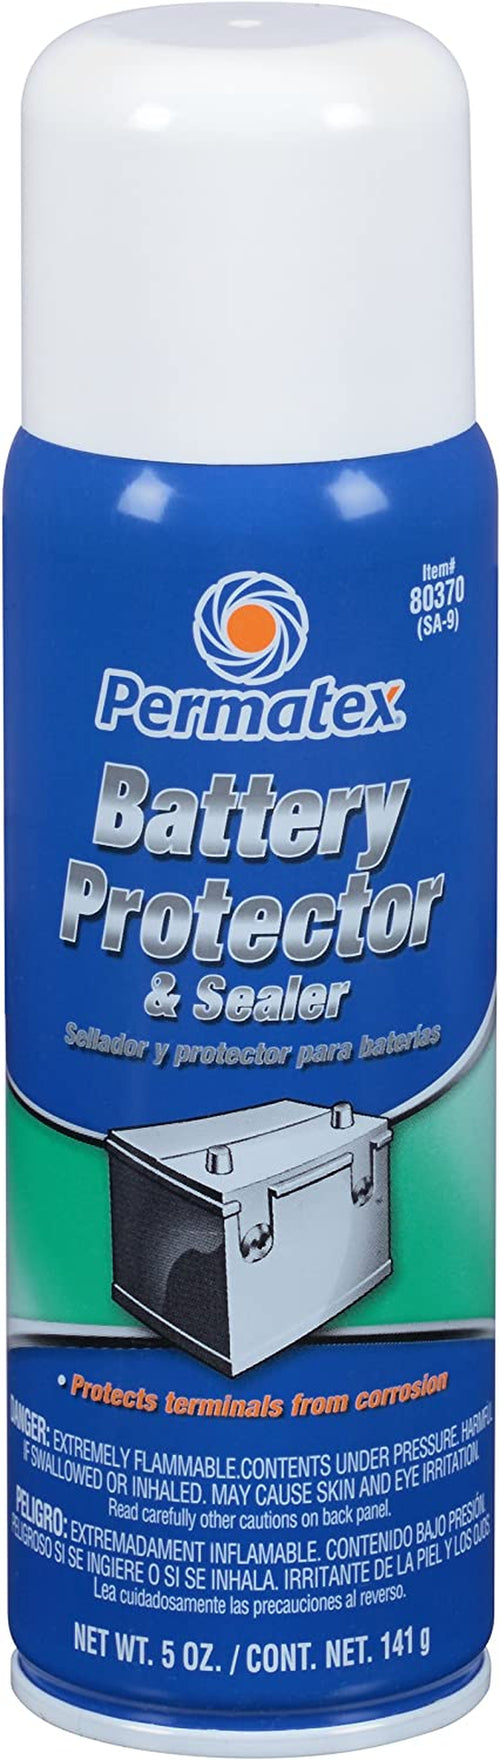 Permatex 80370 Battery Protector and Sealer, 5 Oz. Net Aerosol Can